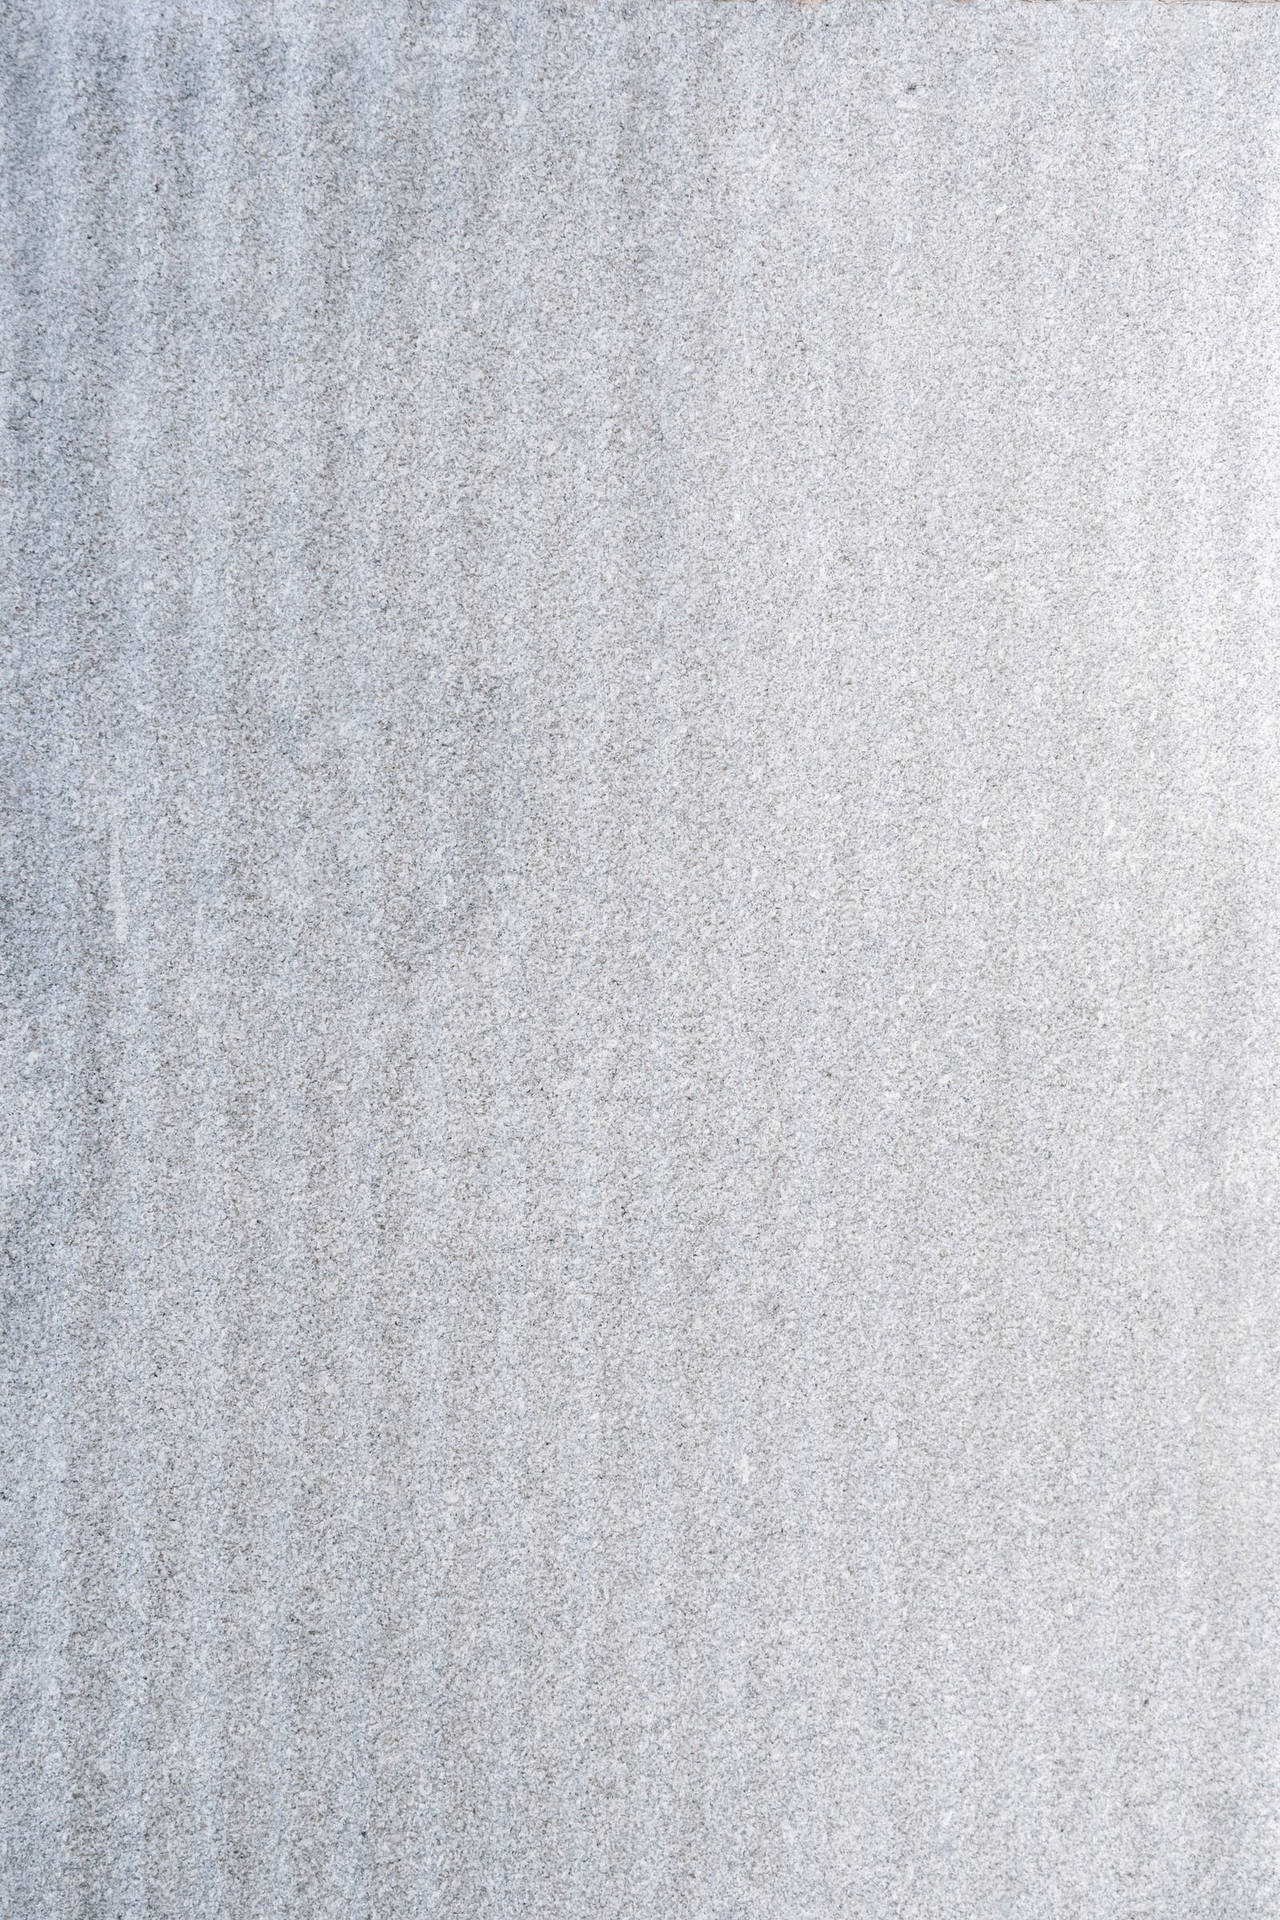 Plain Grey Lineær Ombre Wallpaper